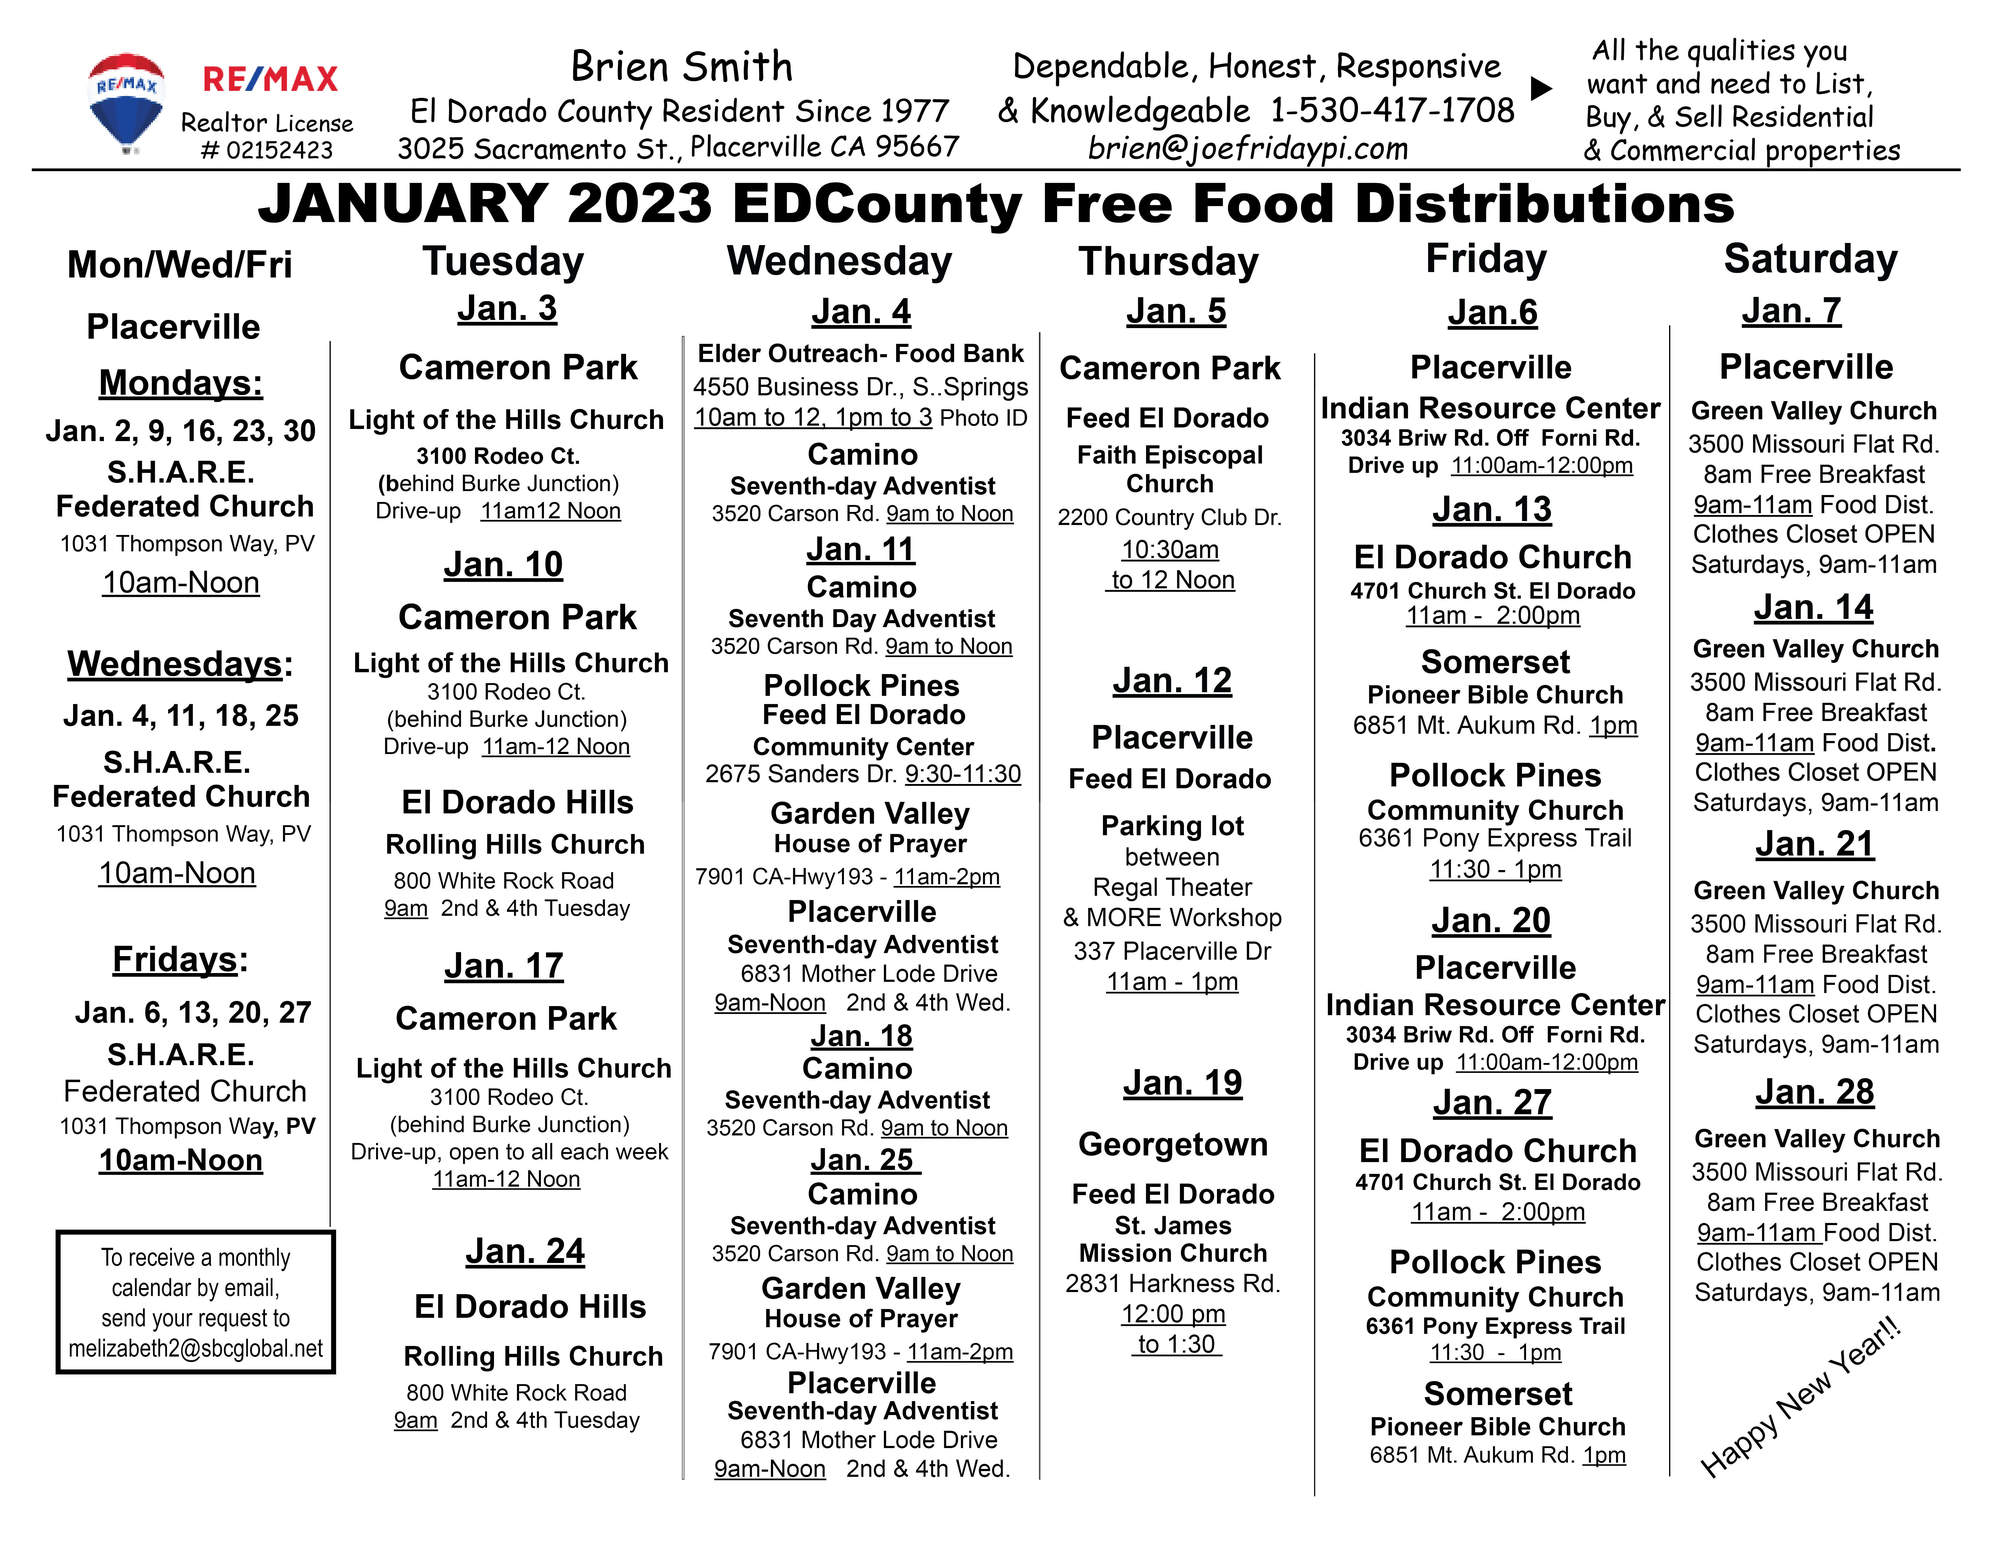 Jan 2023 Food Calendar